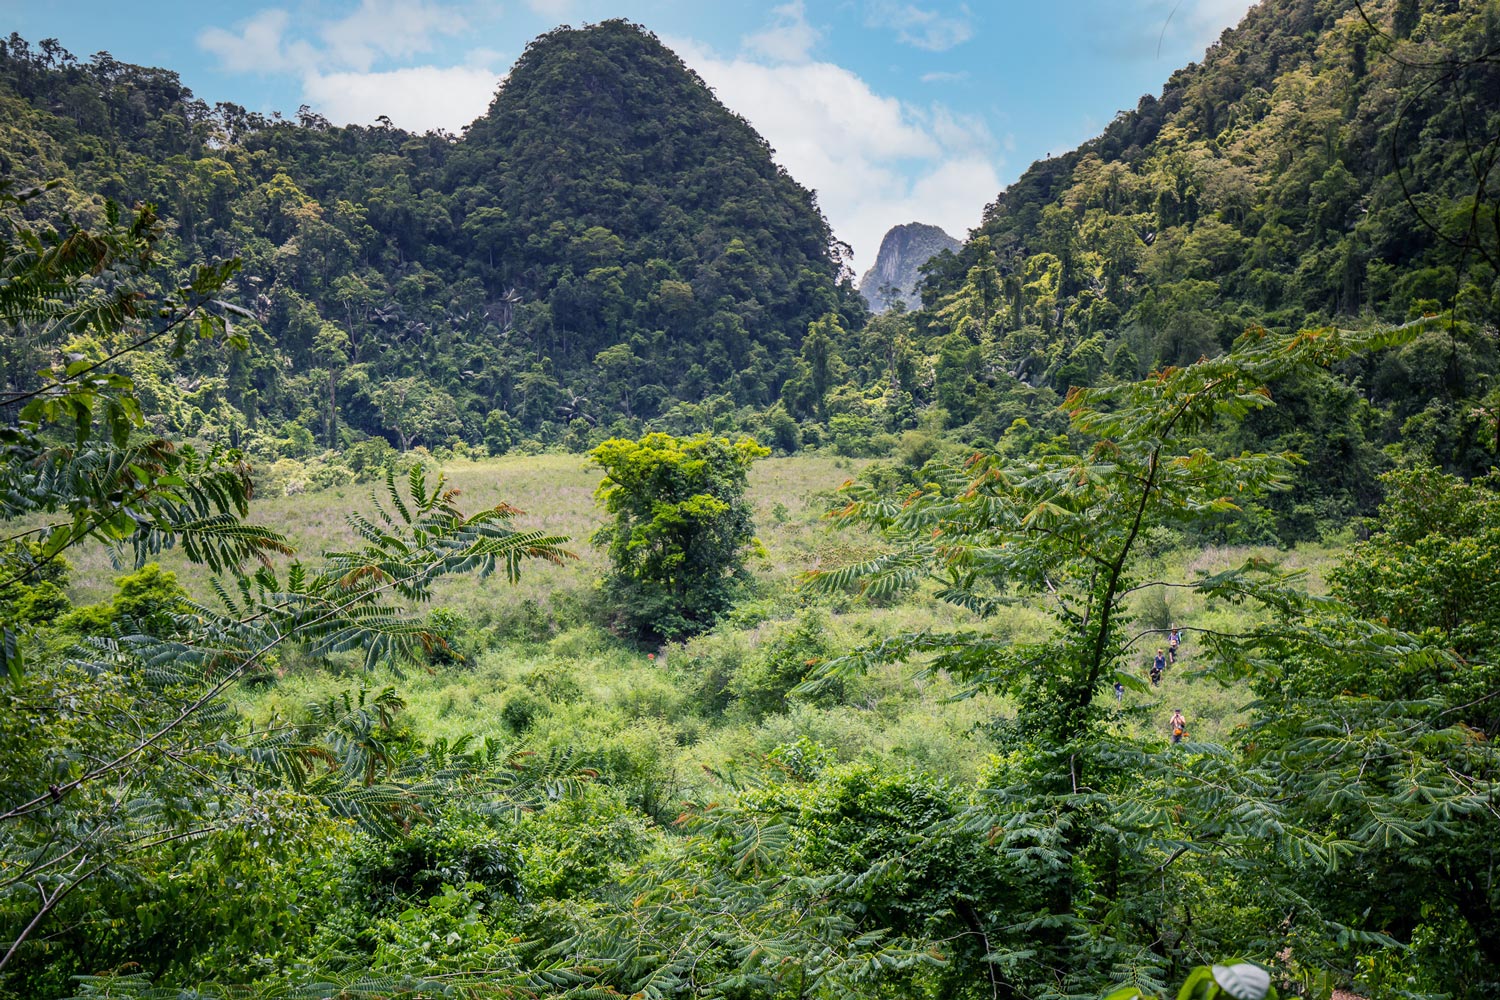 The green natural landscape at Hung Ton Valley.